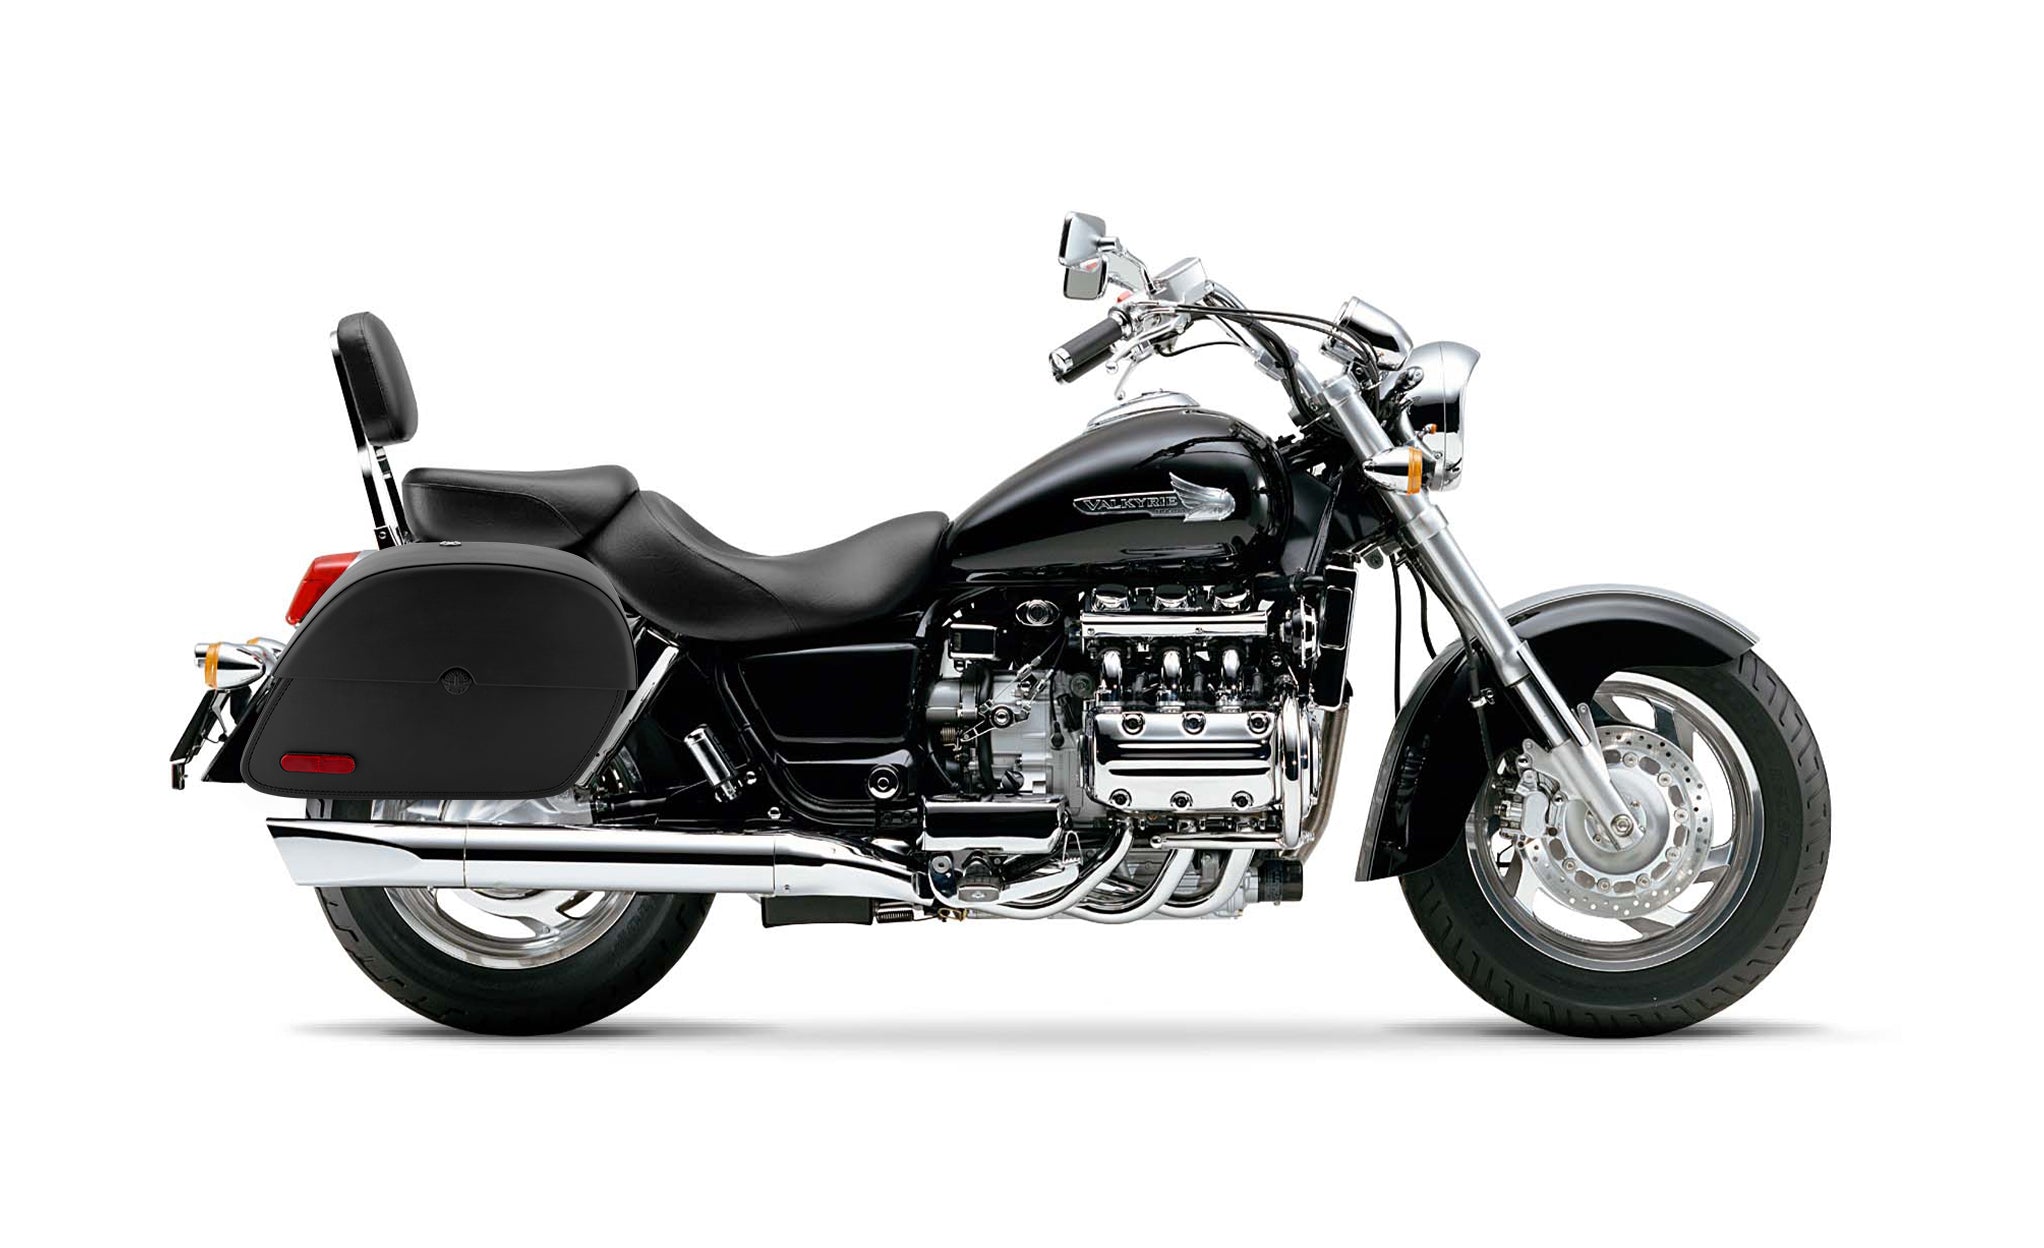 Viking Panzer Large Honda Valkyrie 1500 Standard Leather Motorcycle Saddlebags on Bike Photo @expand